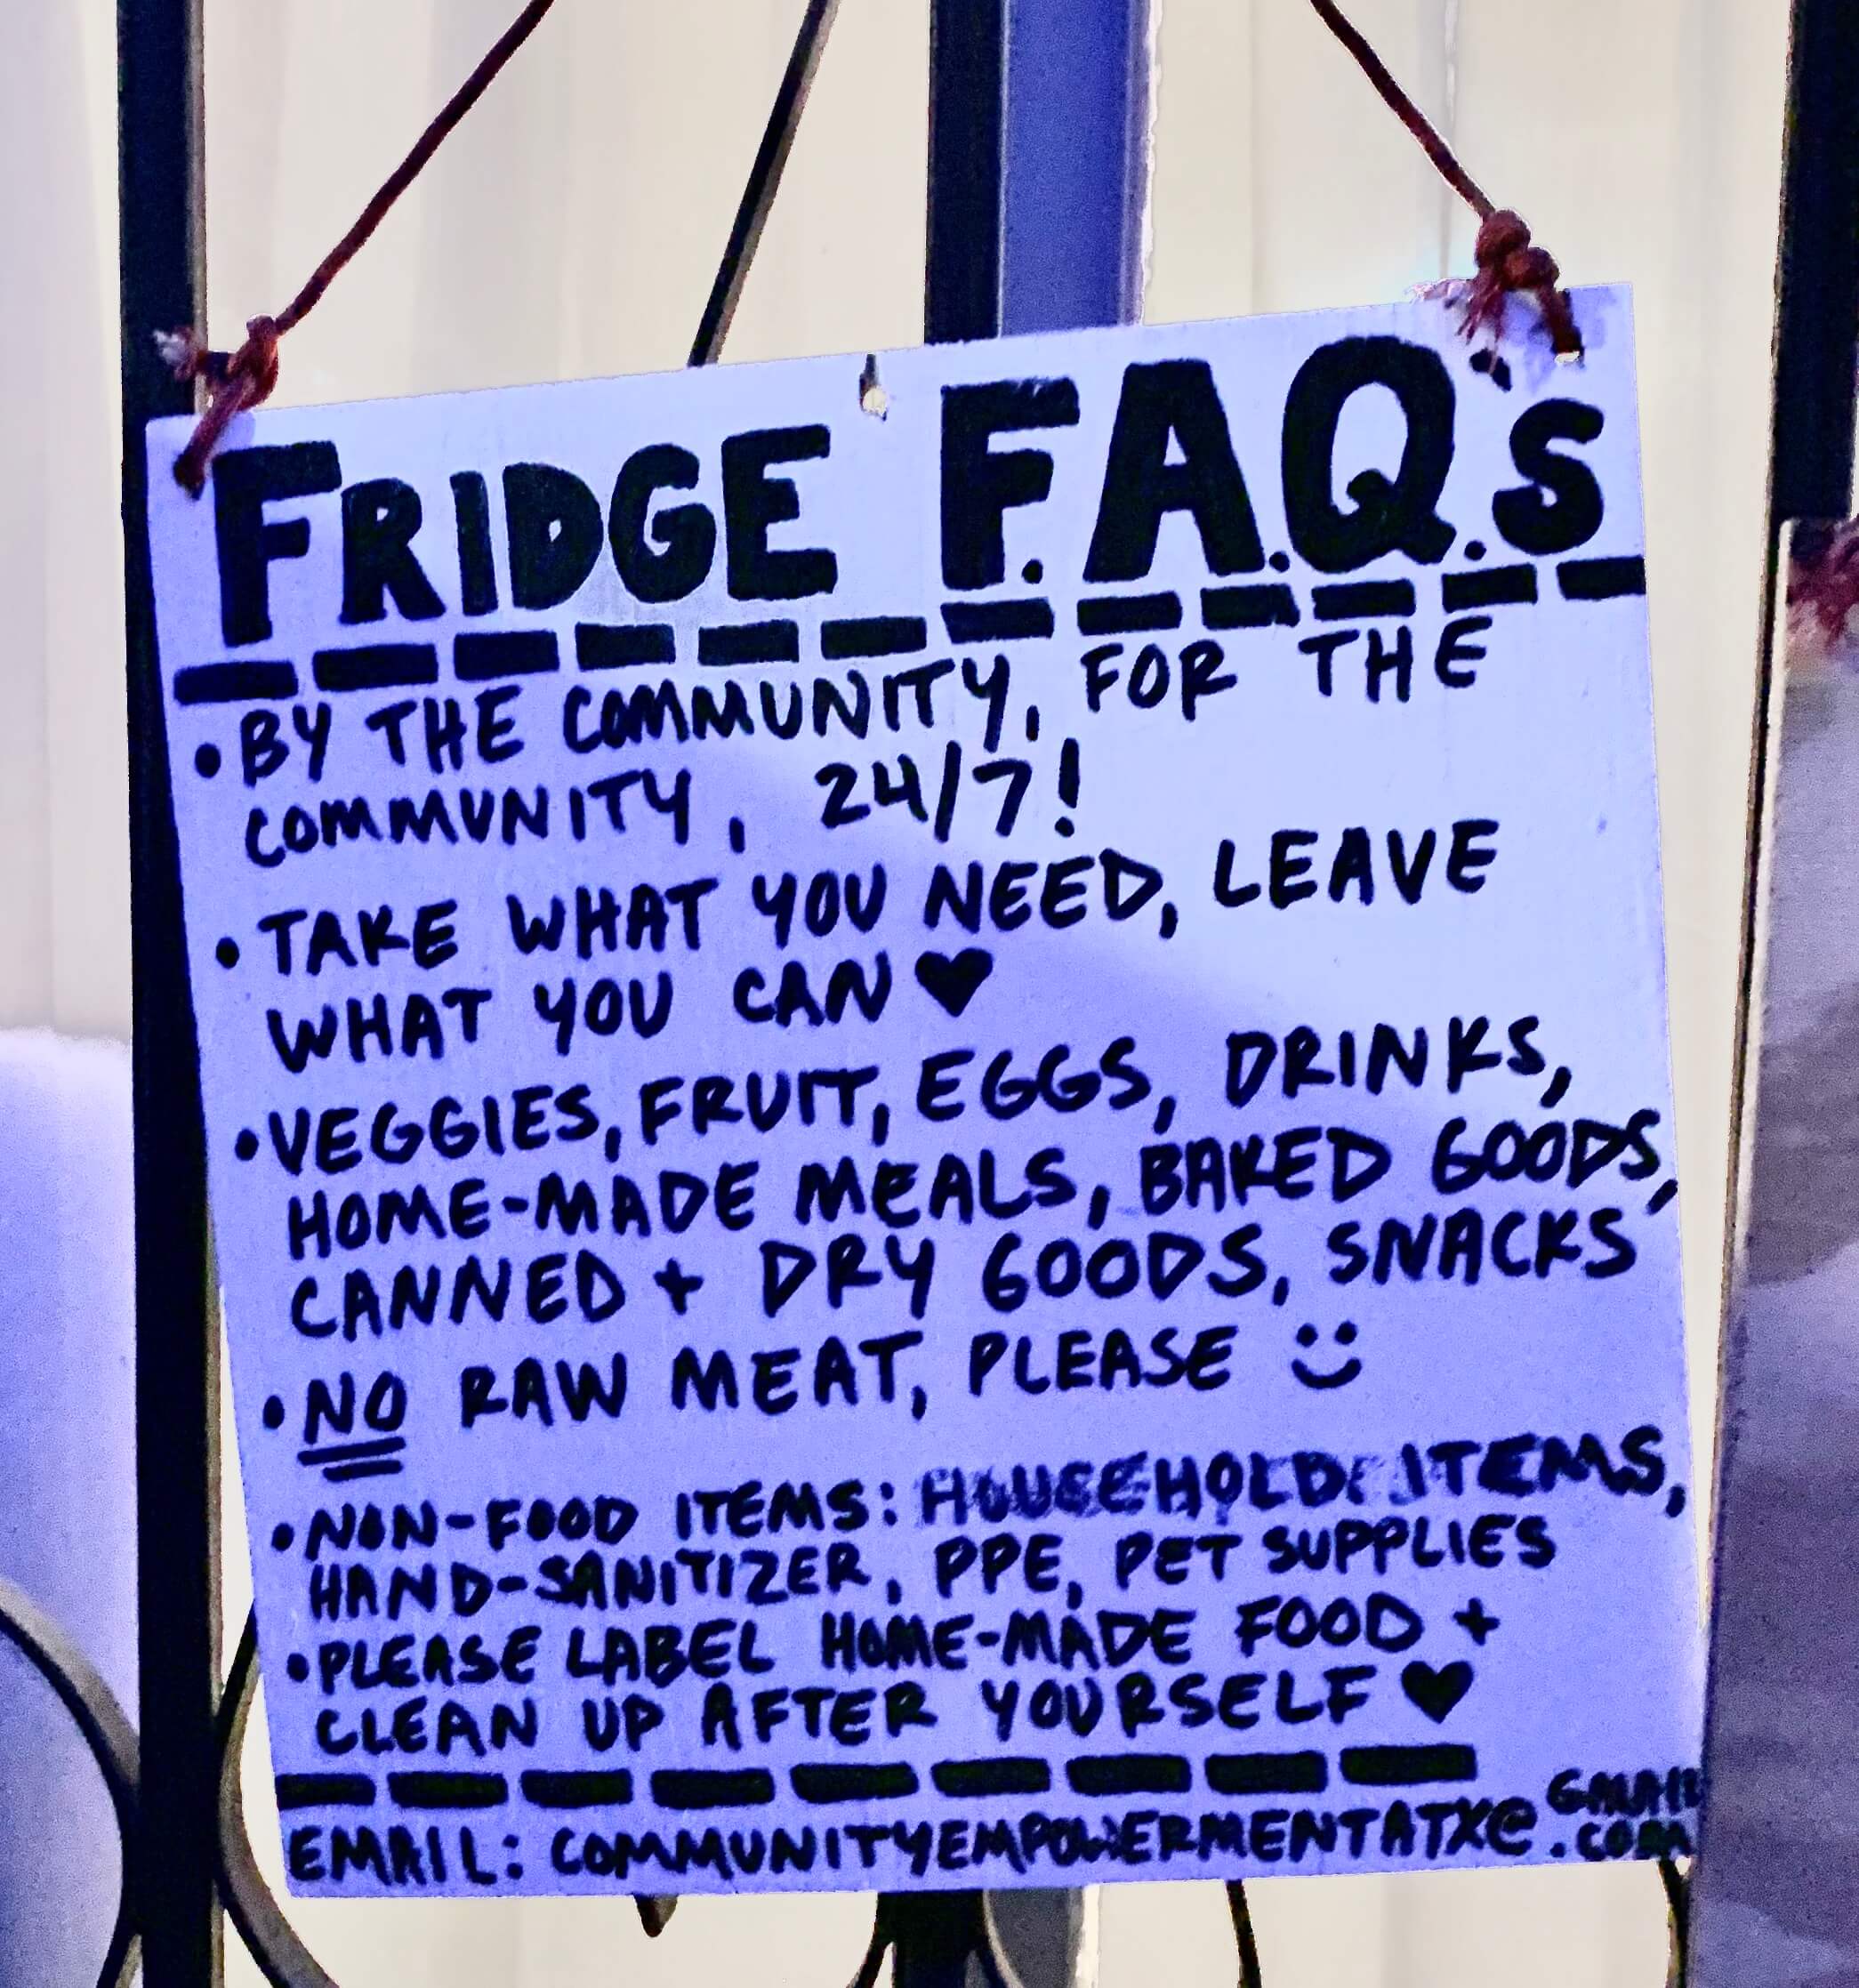 Community Fridge FAQ